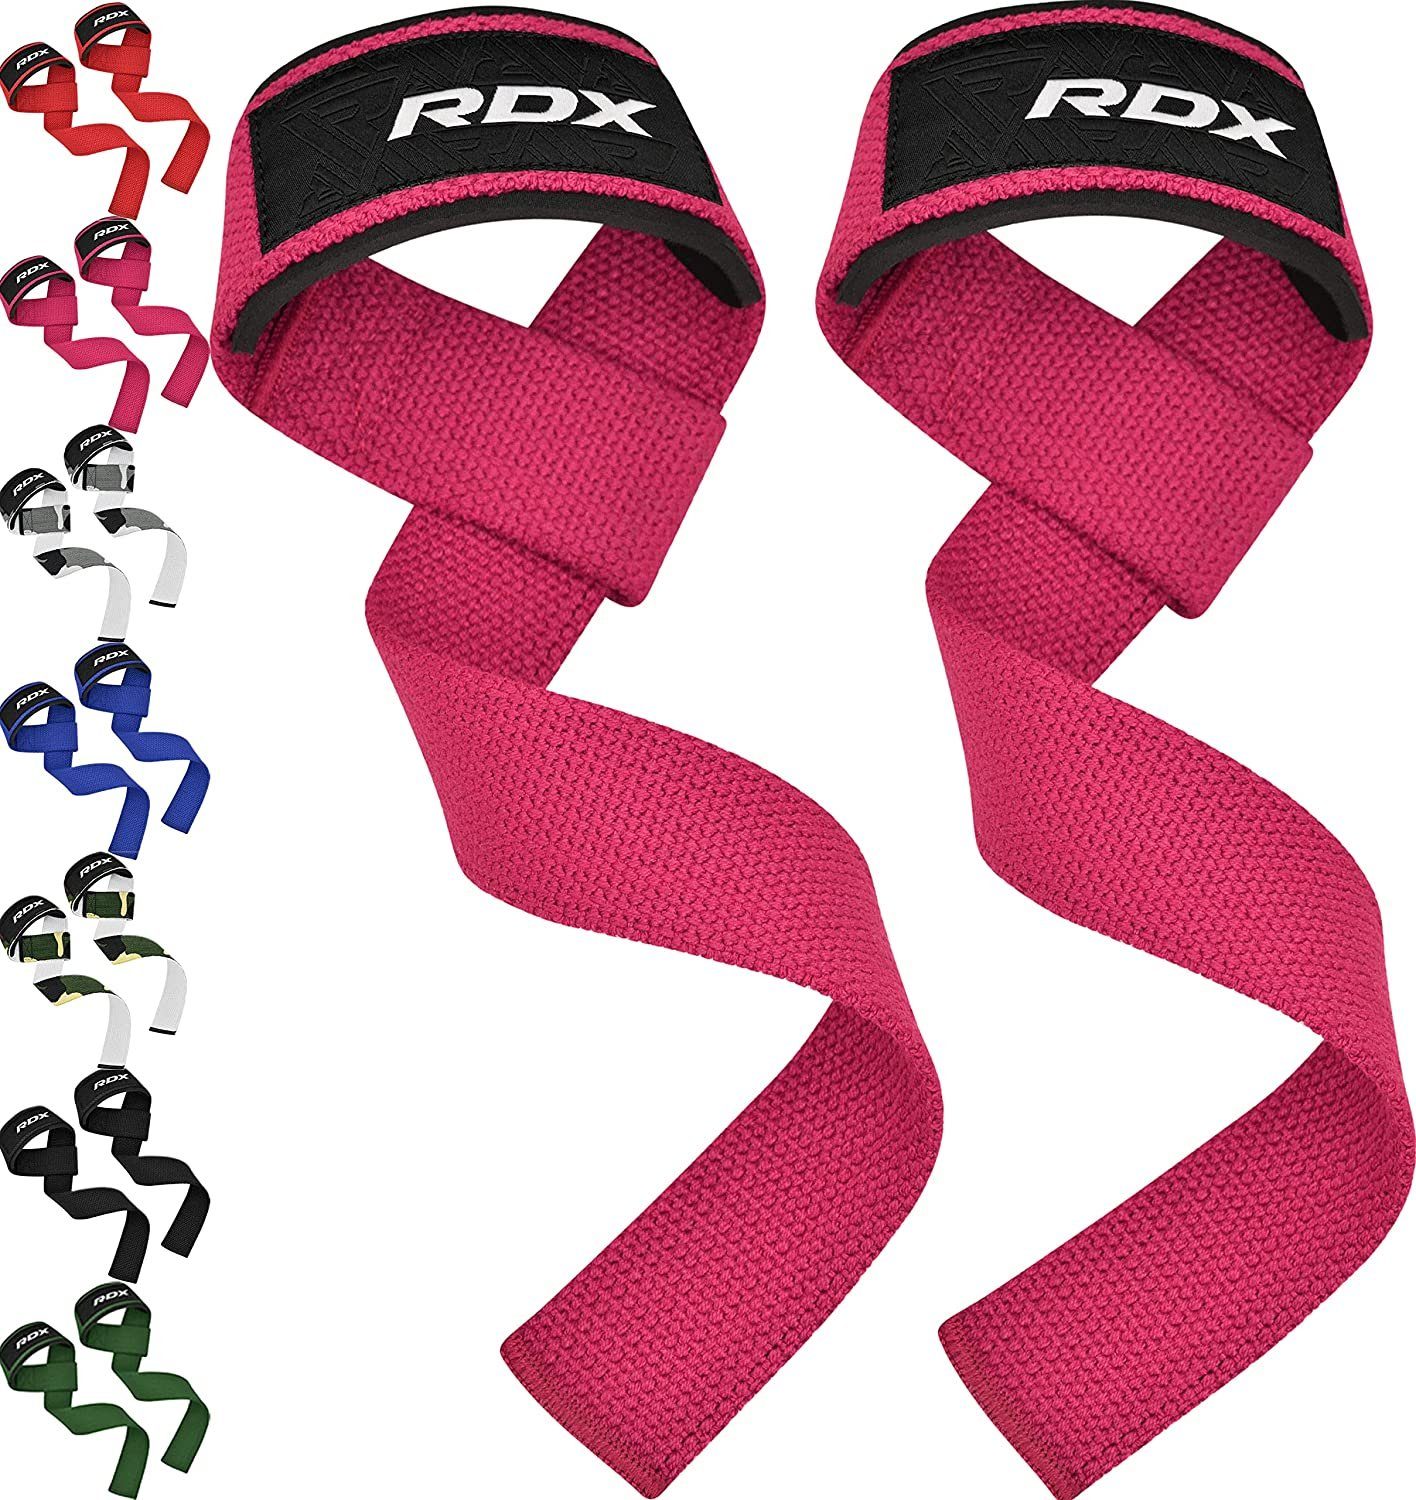 RDX Handgelenkschutz RDX Lifting Straps Strength Training, 60 cm lange professionelle Pink Black